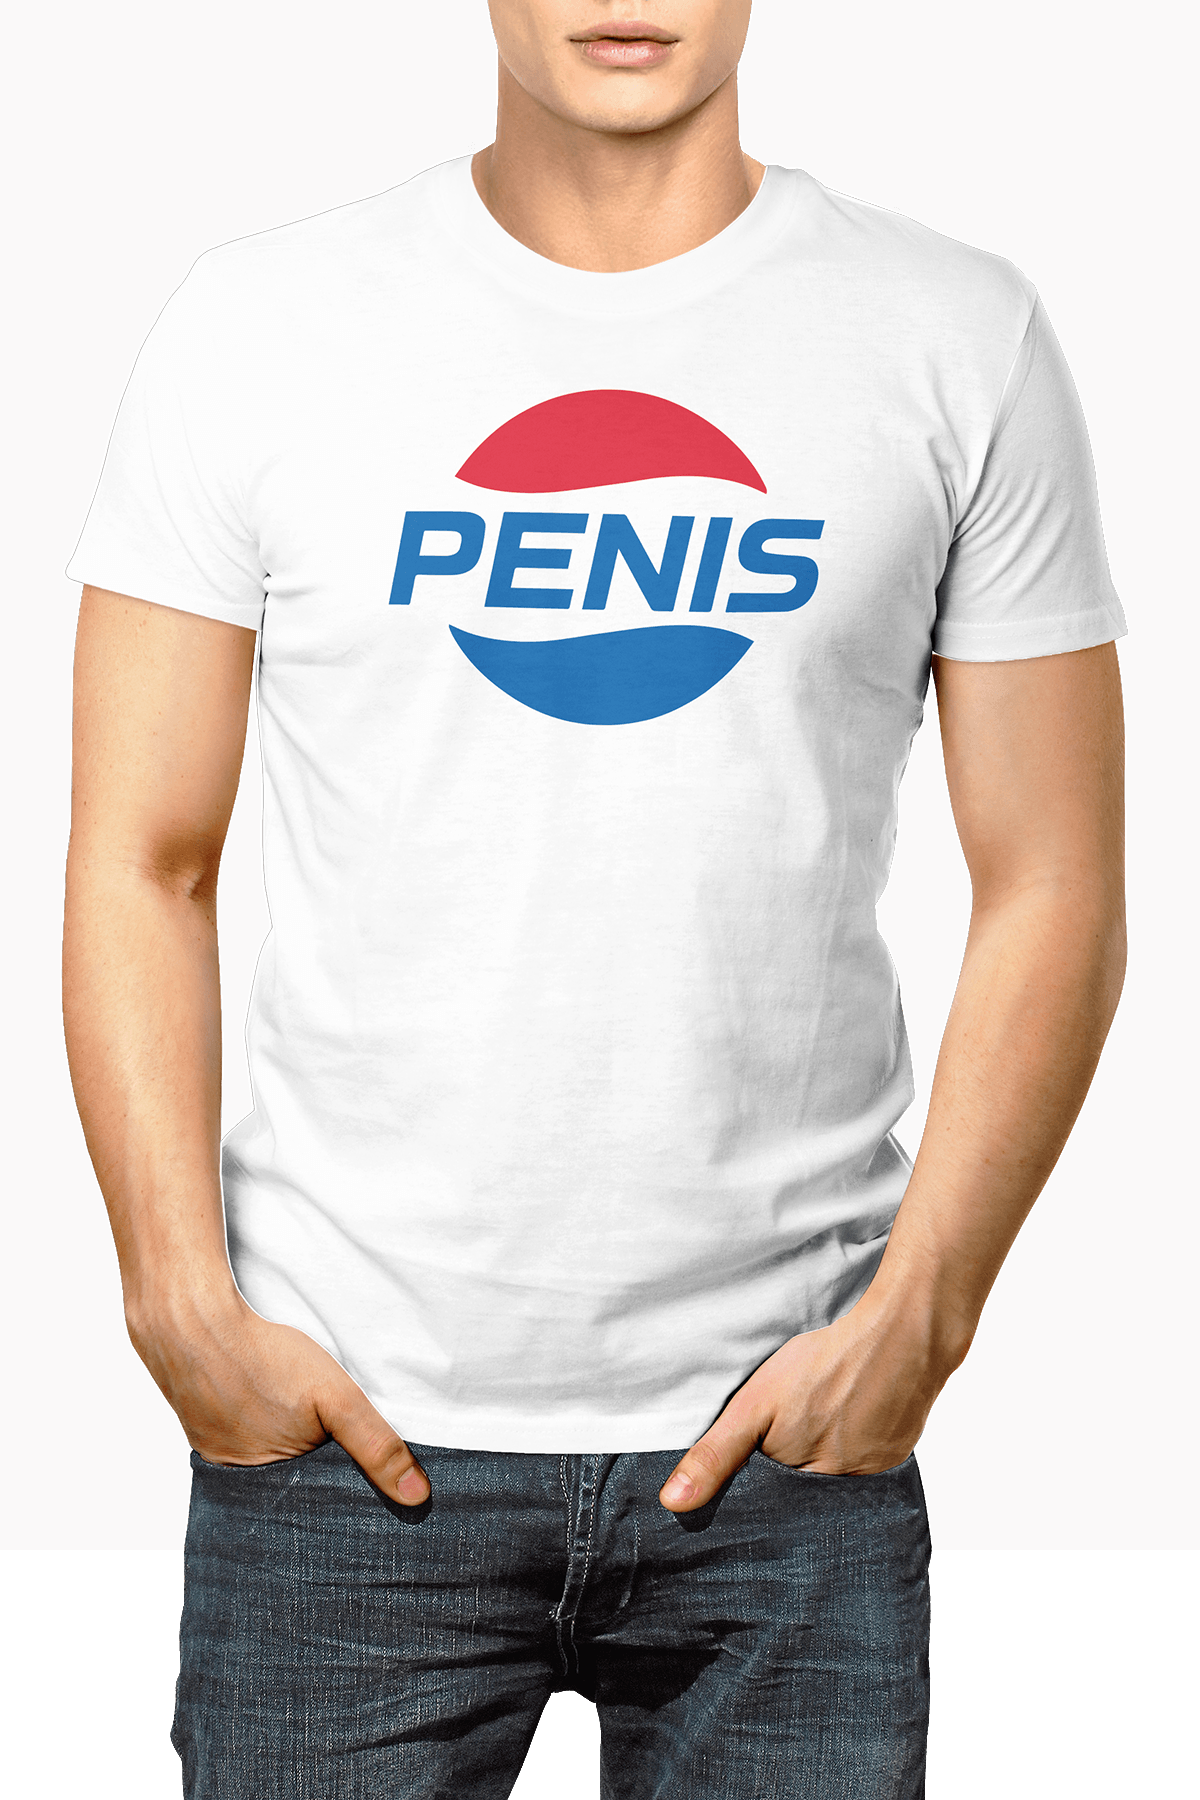 Penis Graphic Tee